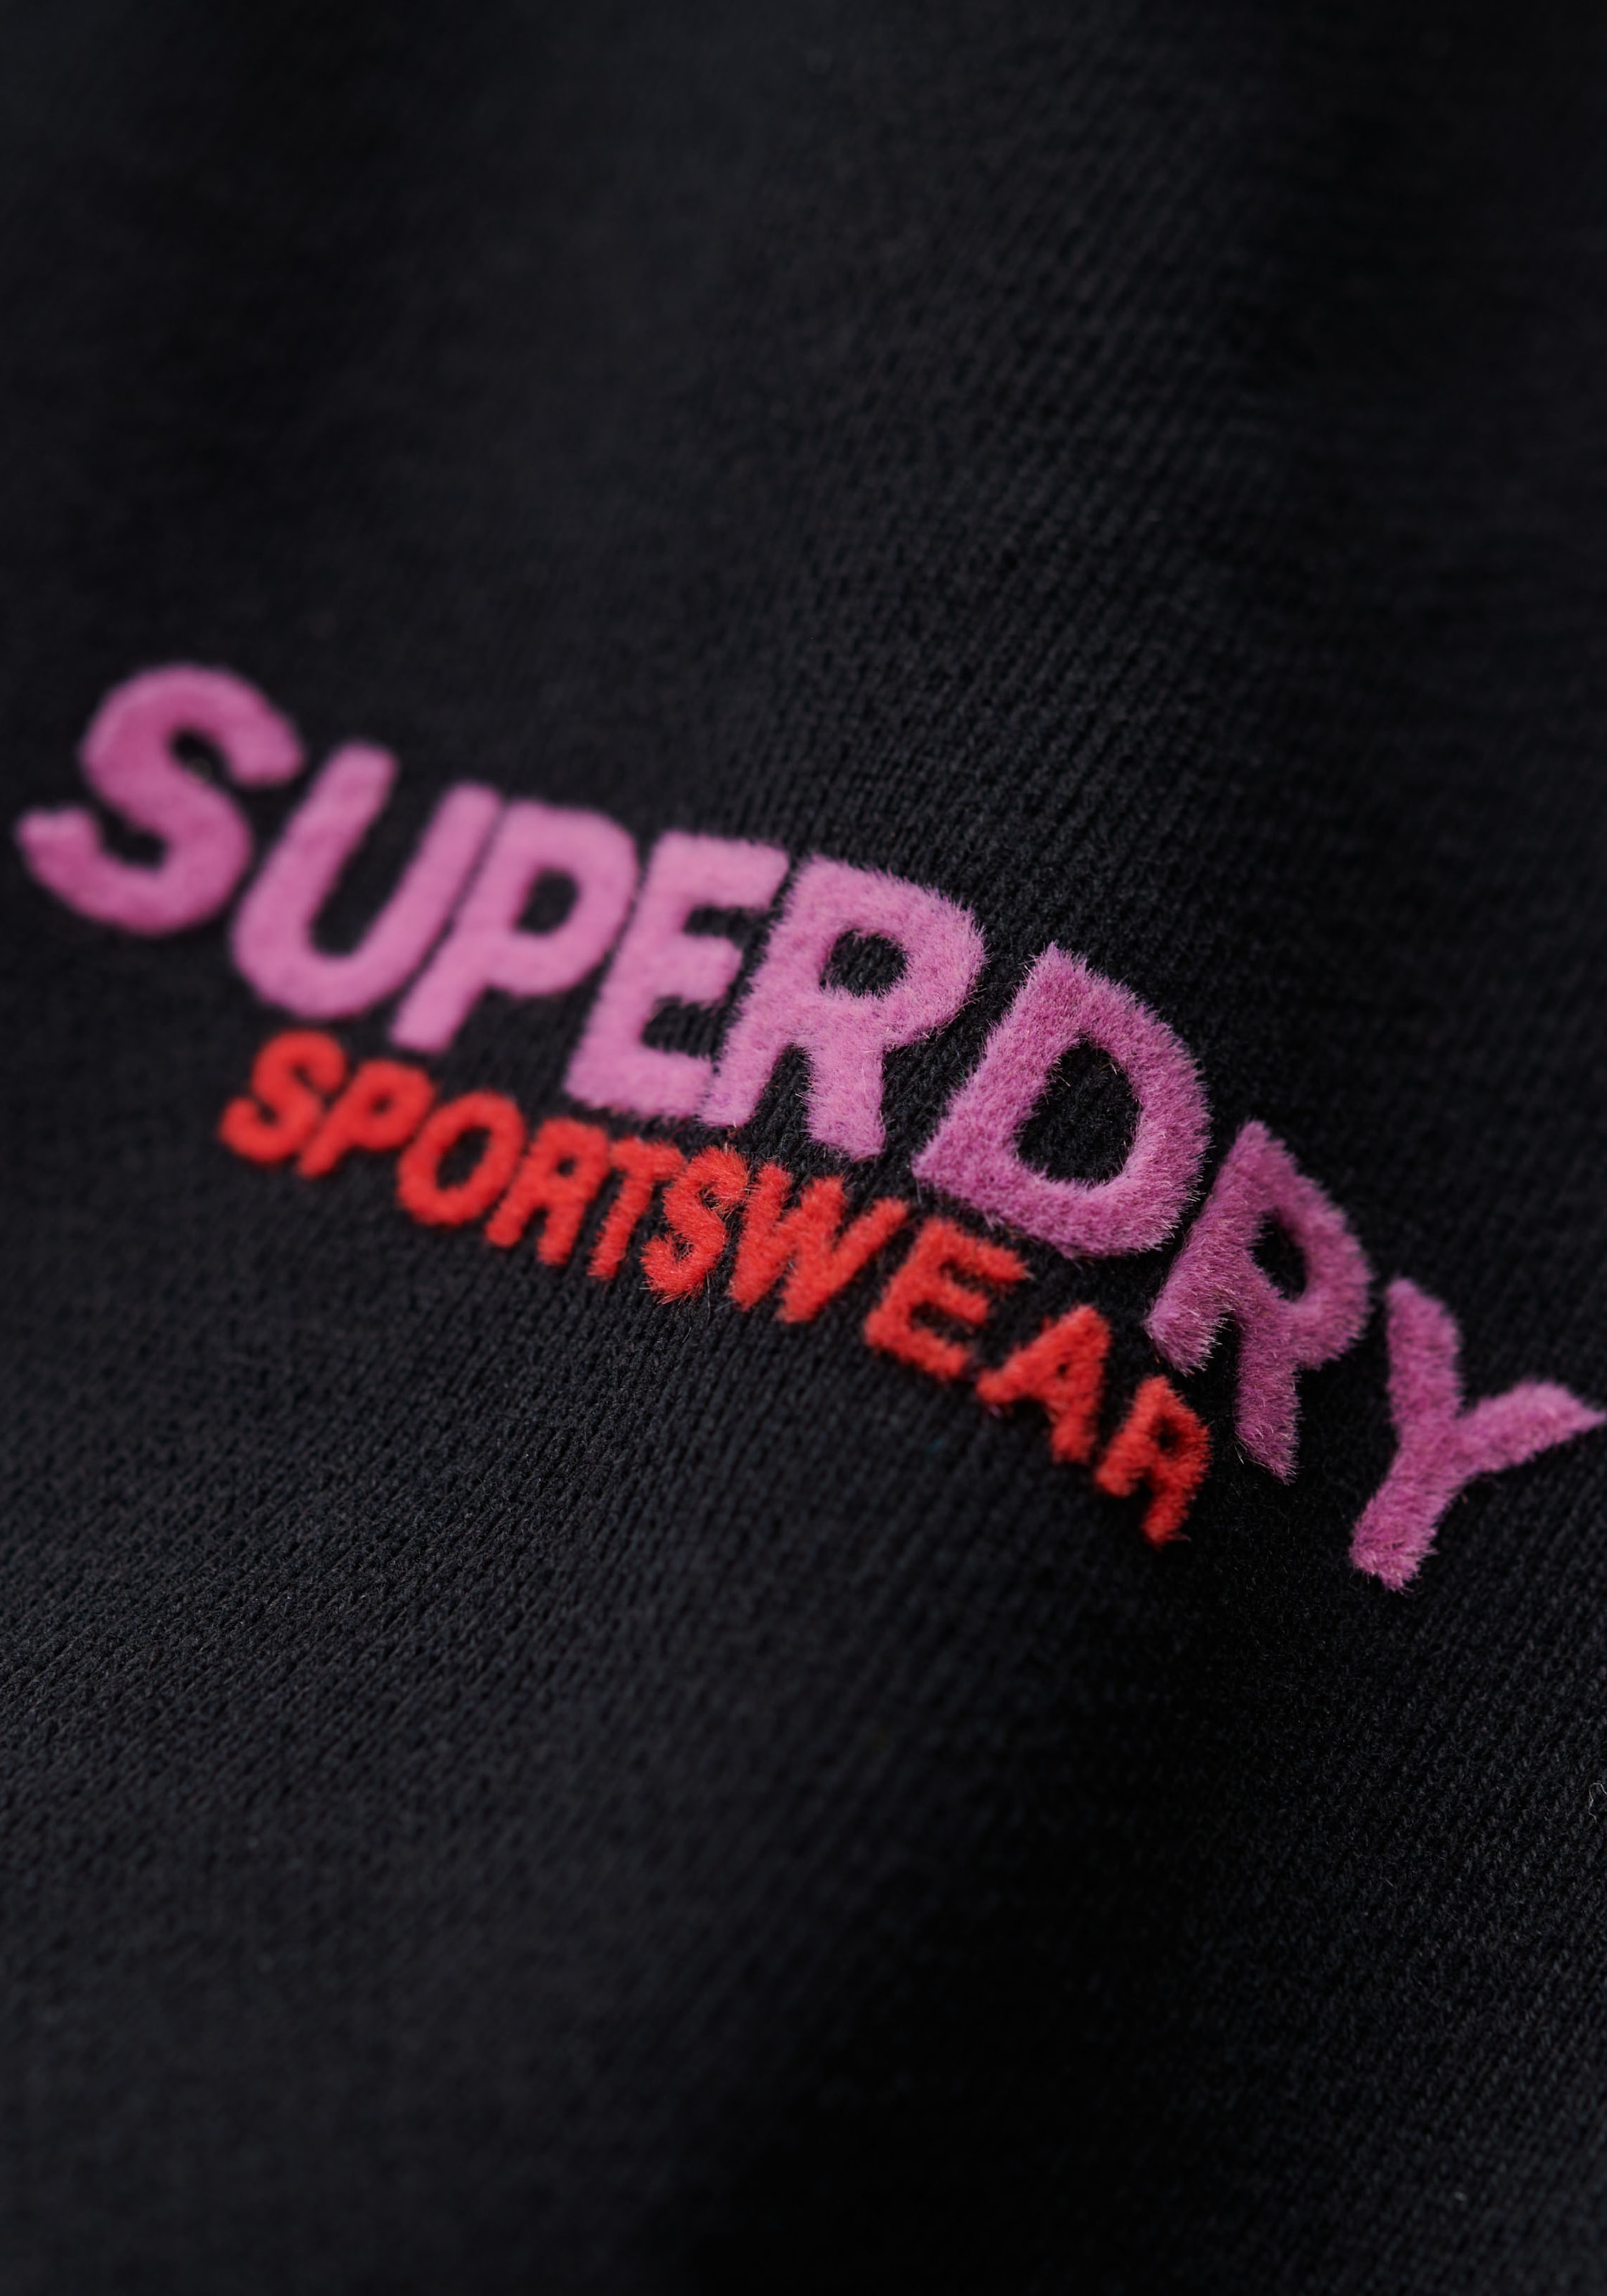 Superdry Shorts »SPORTSWEAR LOGO RACER SHORT«